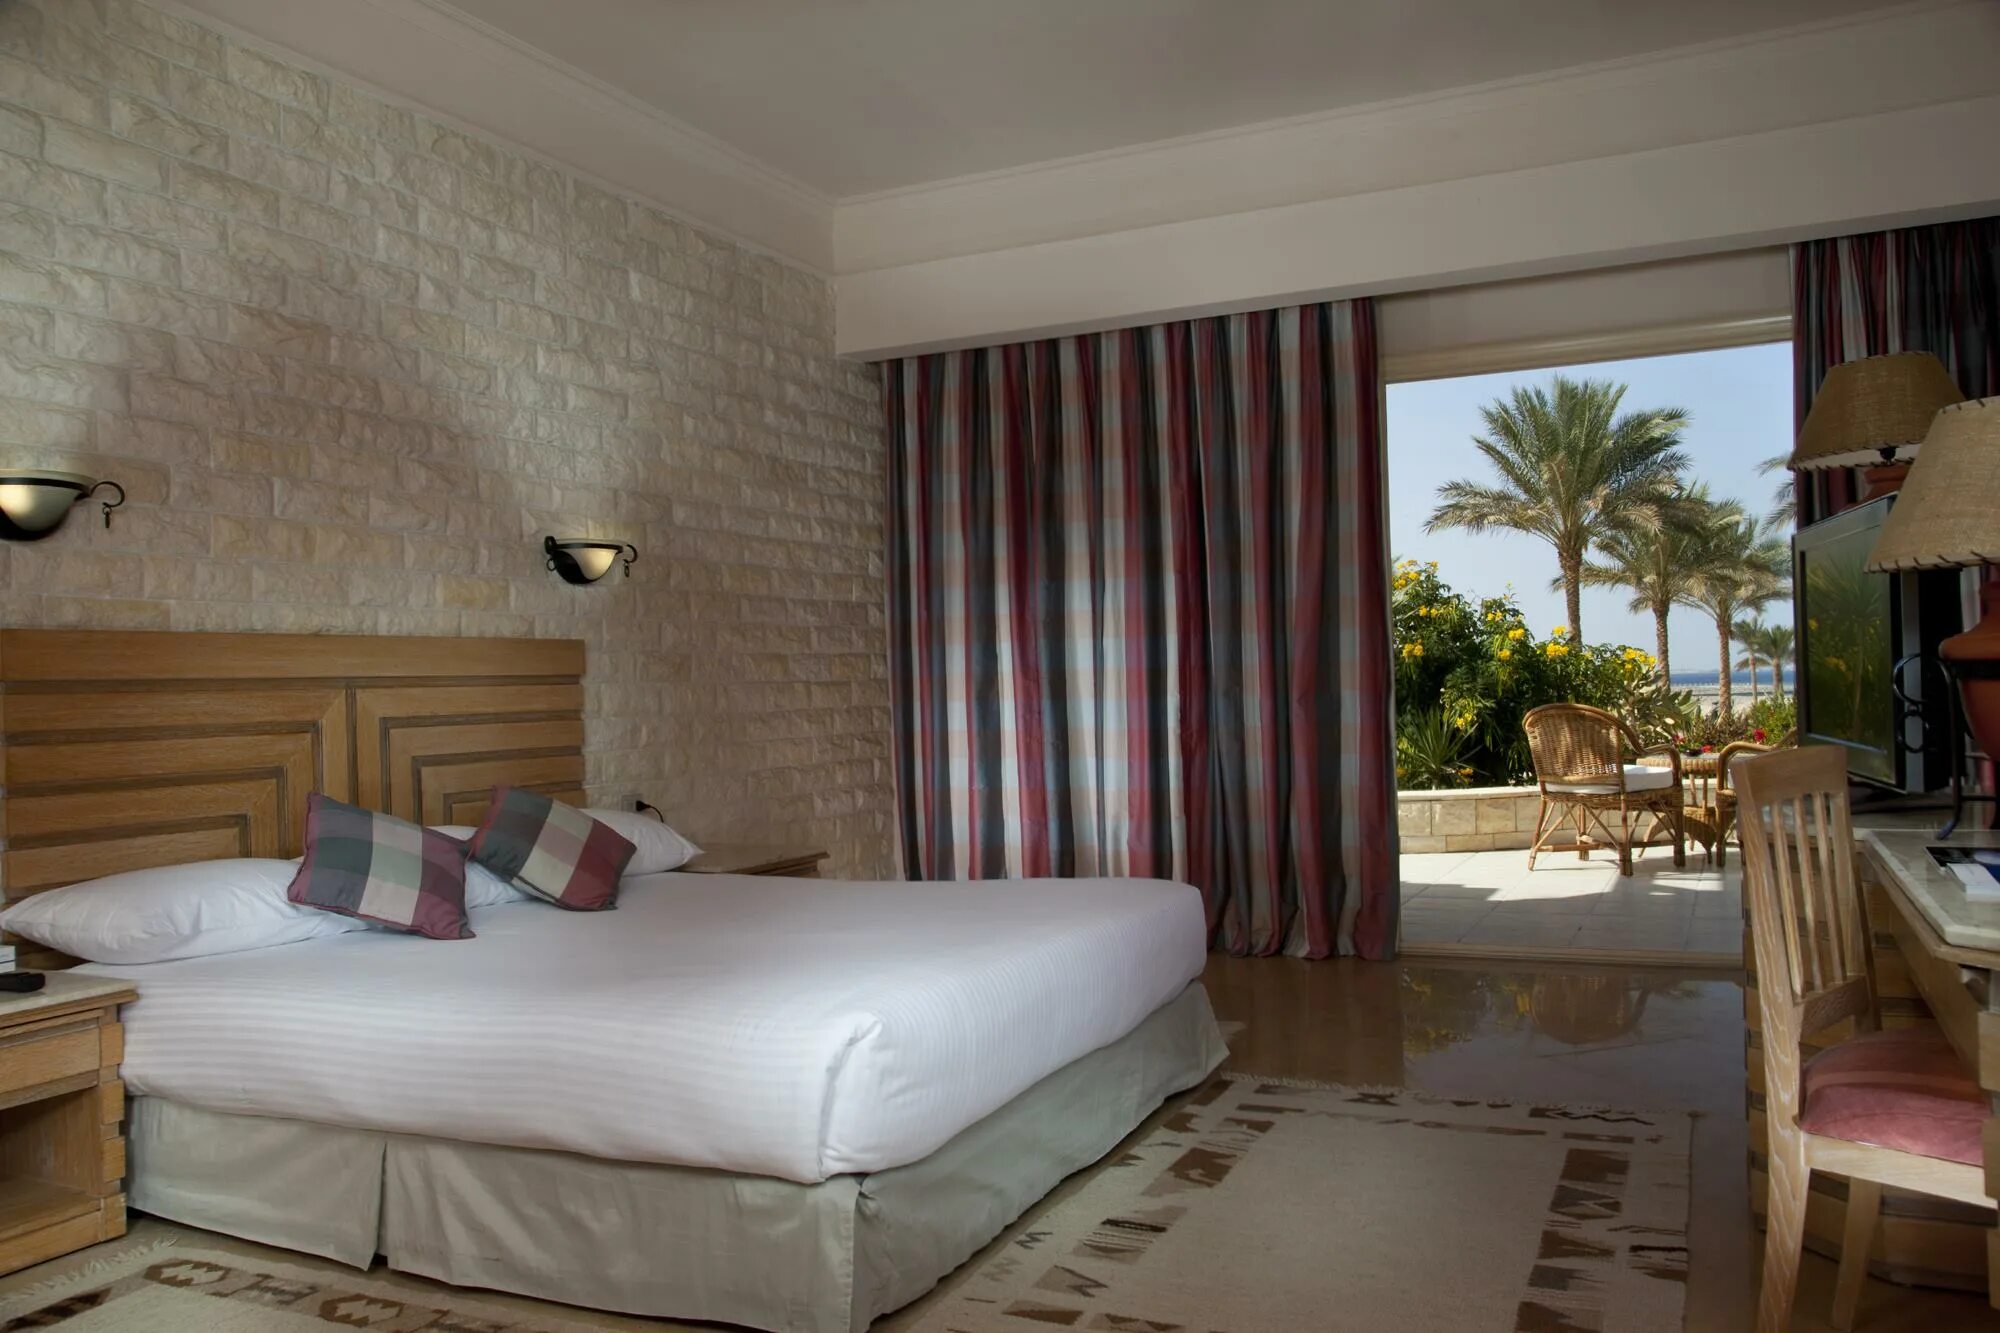 Coral beach rotana resort. Отель Coral Beach Resort Hurghada. Отель Coral Beach Hotel Hurghada 4*. Отель Корал Бич ротана Резорт Хургада. Ротана Хургада отель Корал Бич.